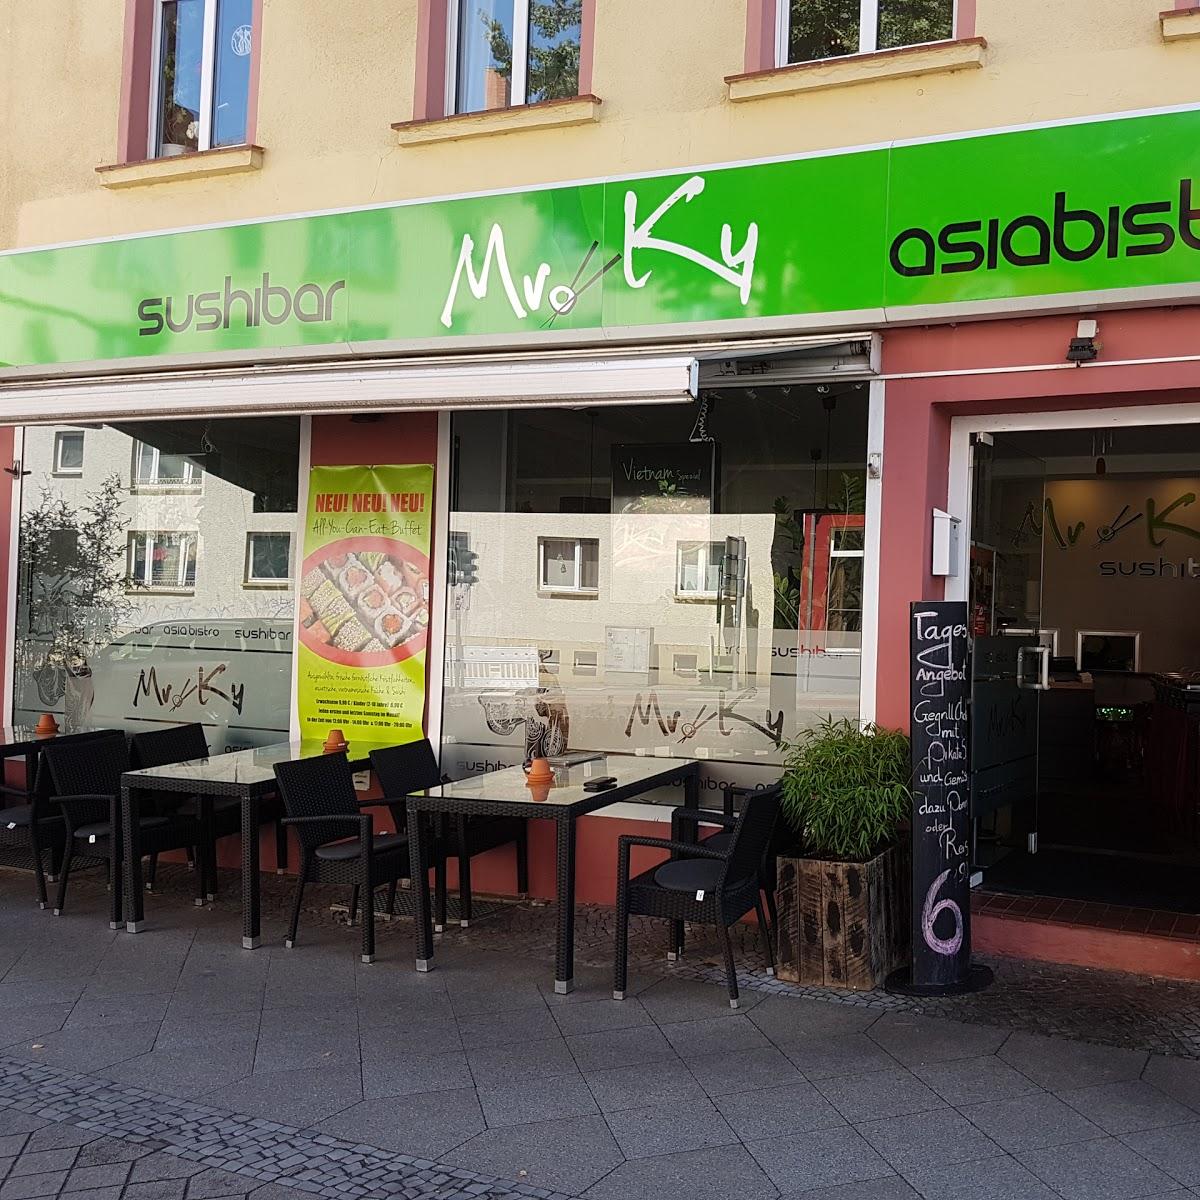 Restaurant "Mr. Ky Sushibar" in  Eberswalde